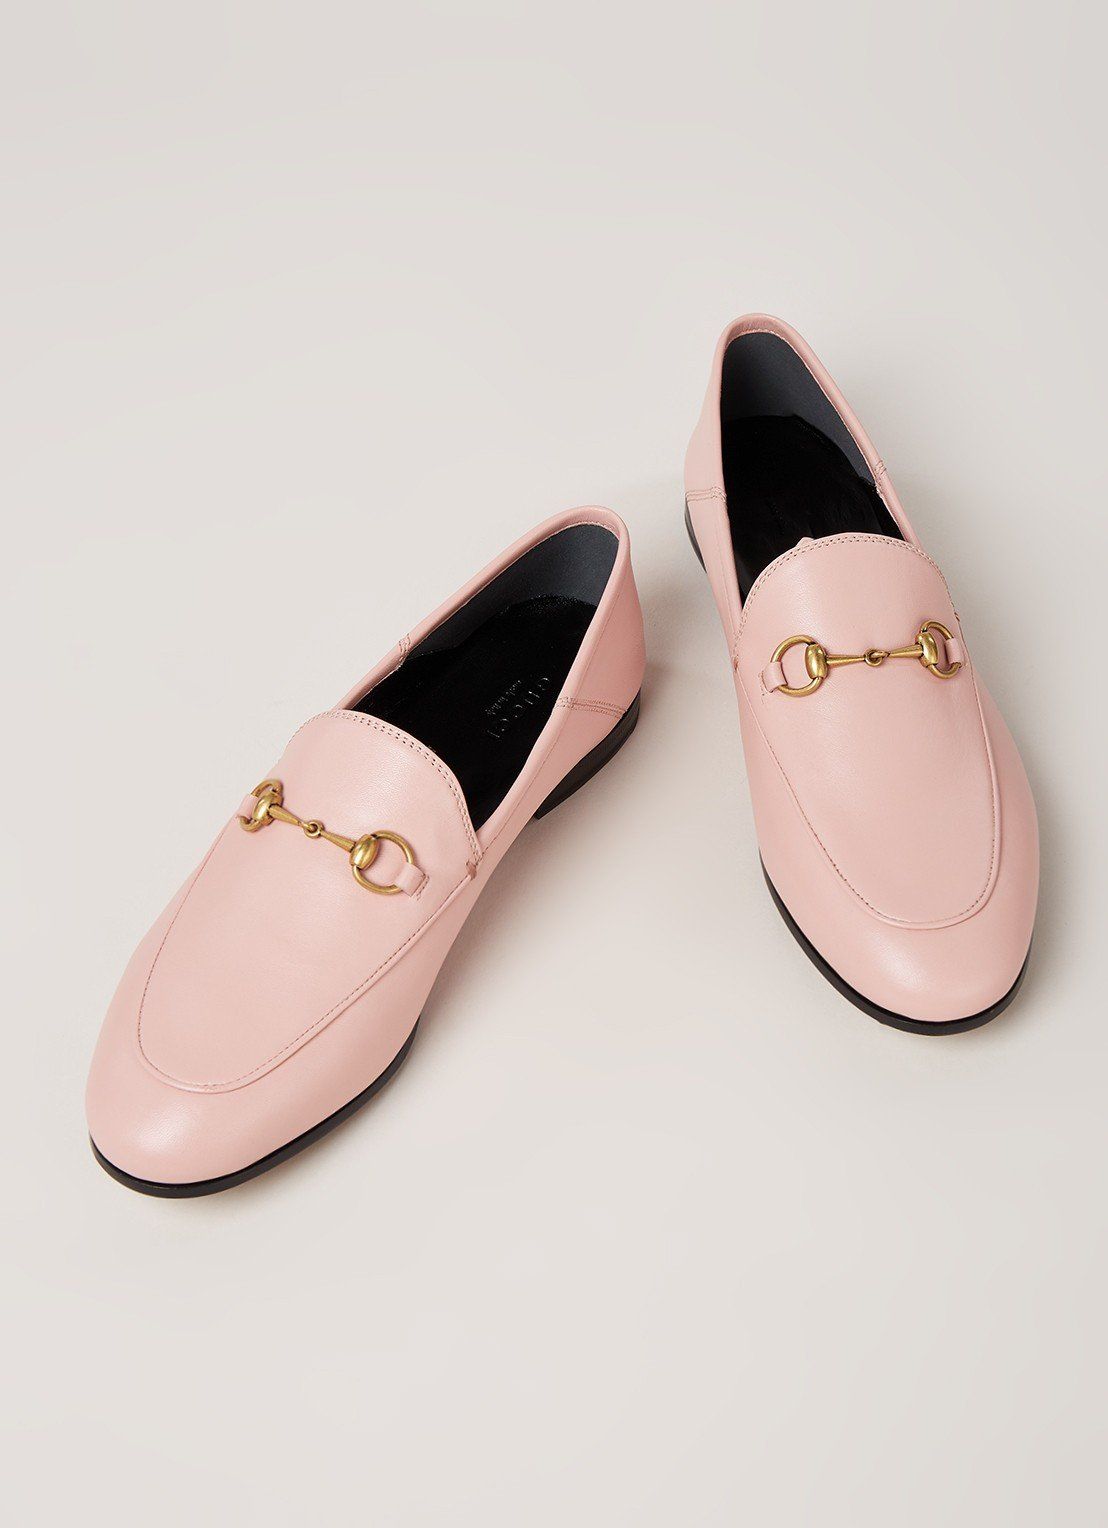 Schoenen Moccasins JustFab Mocassins goud-roze kleurverloop elegant 